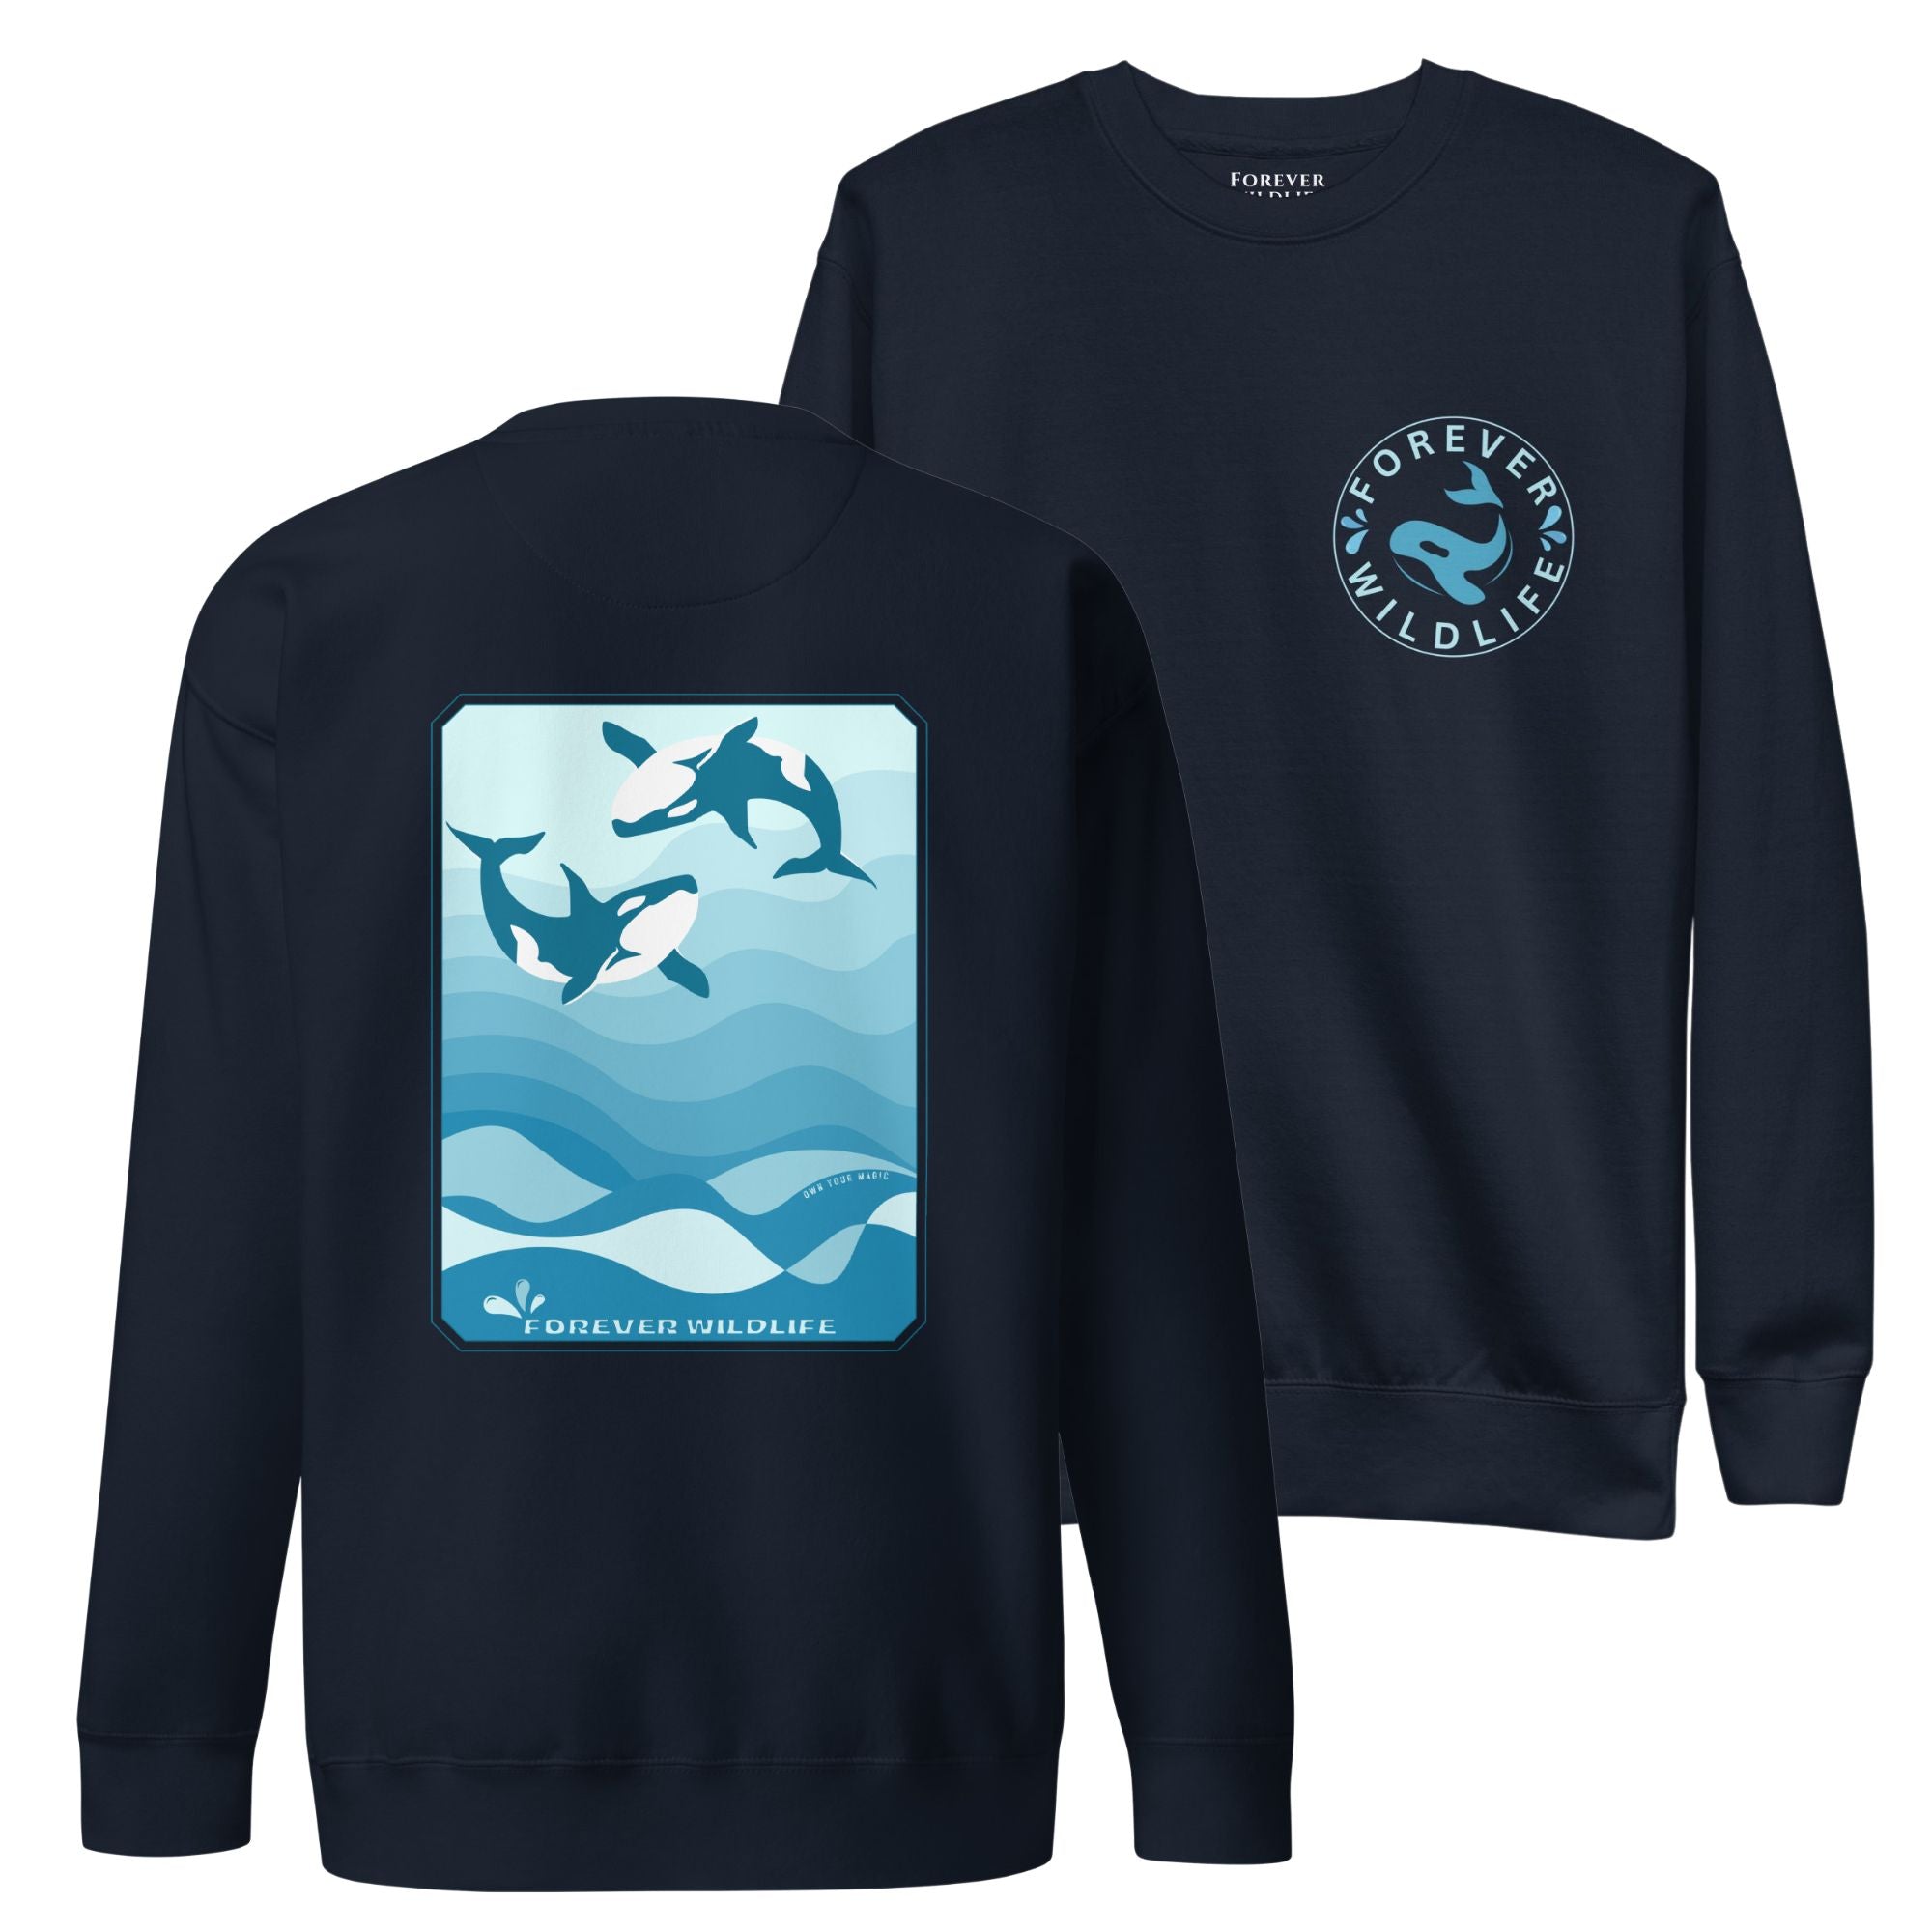 Orca Sweatshirt, beautiful Navy Orca Sweatshirt with Killer Whales on the sweatshirt by Forever Wildlife selling Wildlife Sweatshirts.